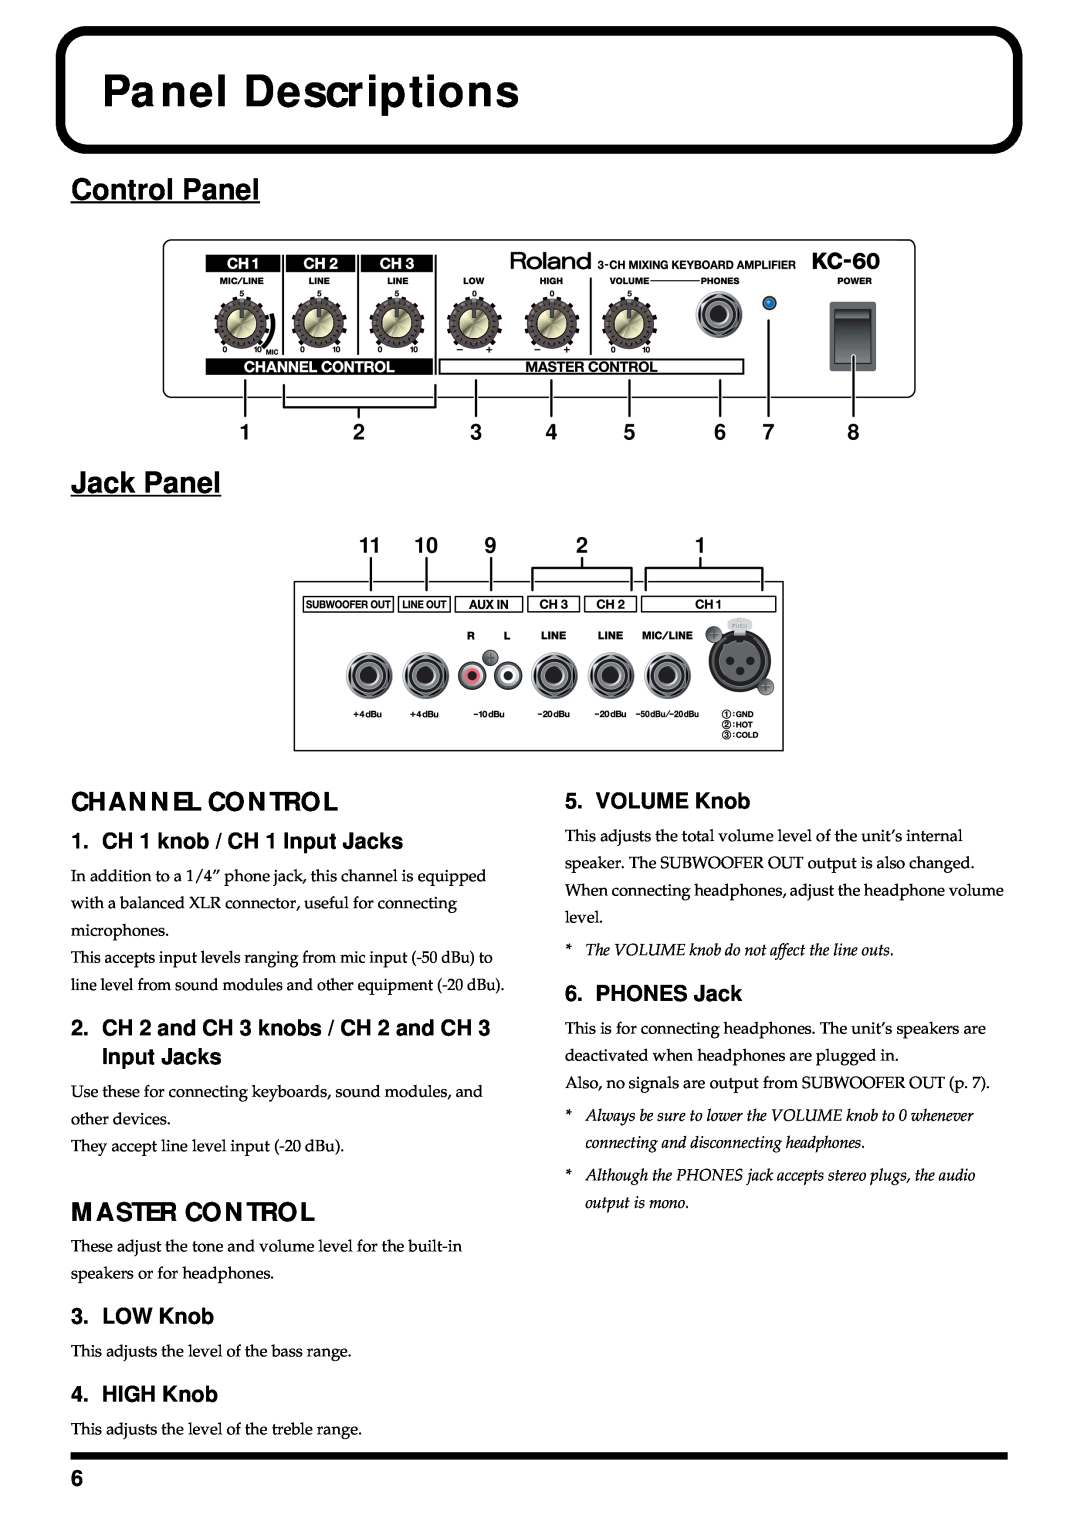 Roland KC-60 Panel Descriptions, Channel Control, Master Control, CH 1 knob / CH 1 Input Jacks, LOW Knob, HIGH Knob 